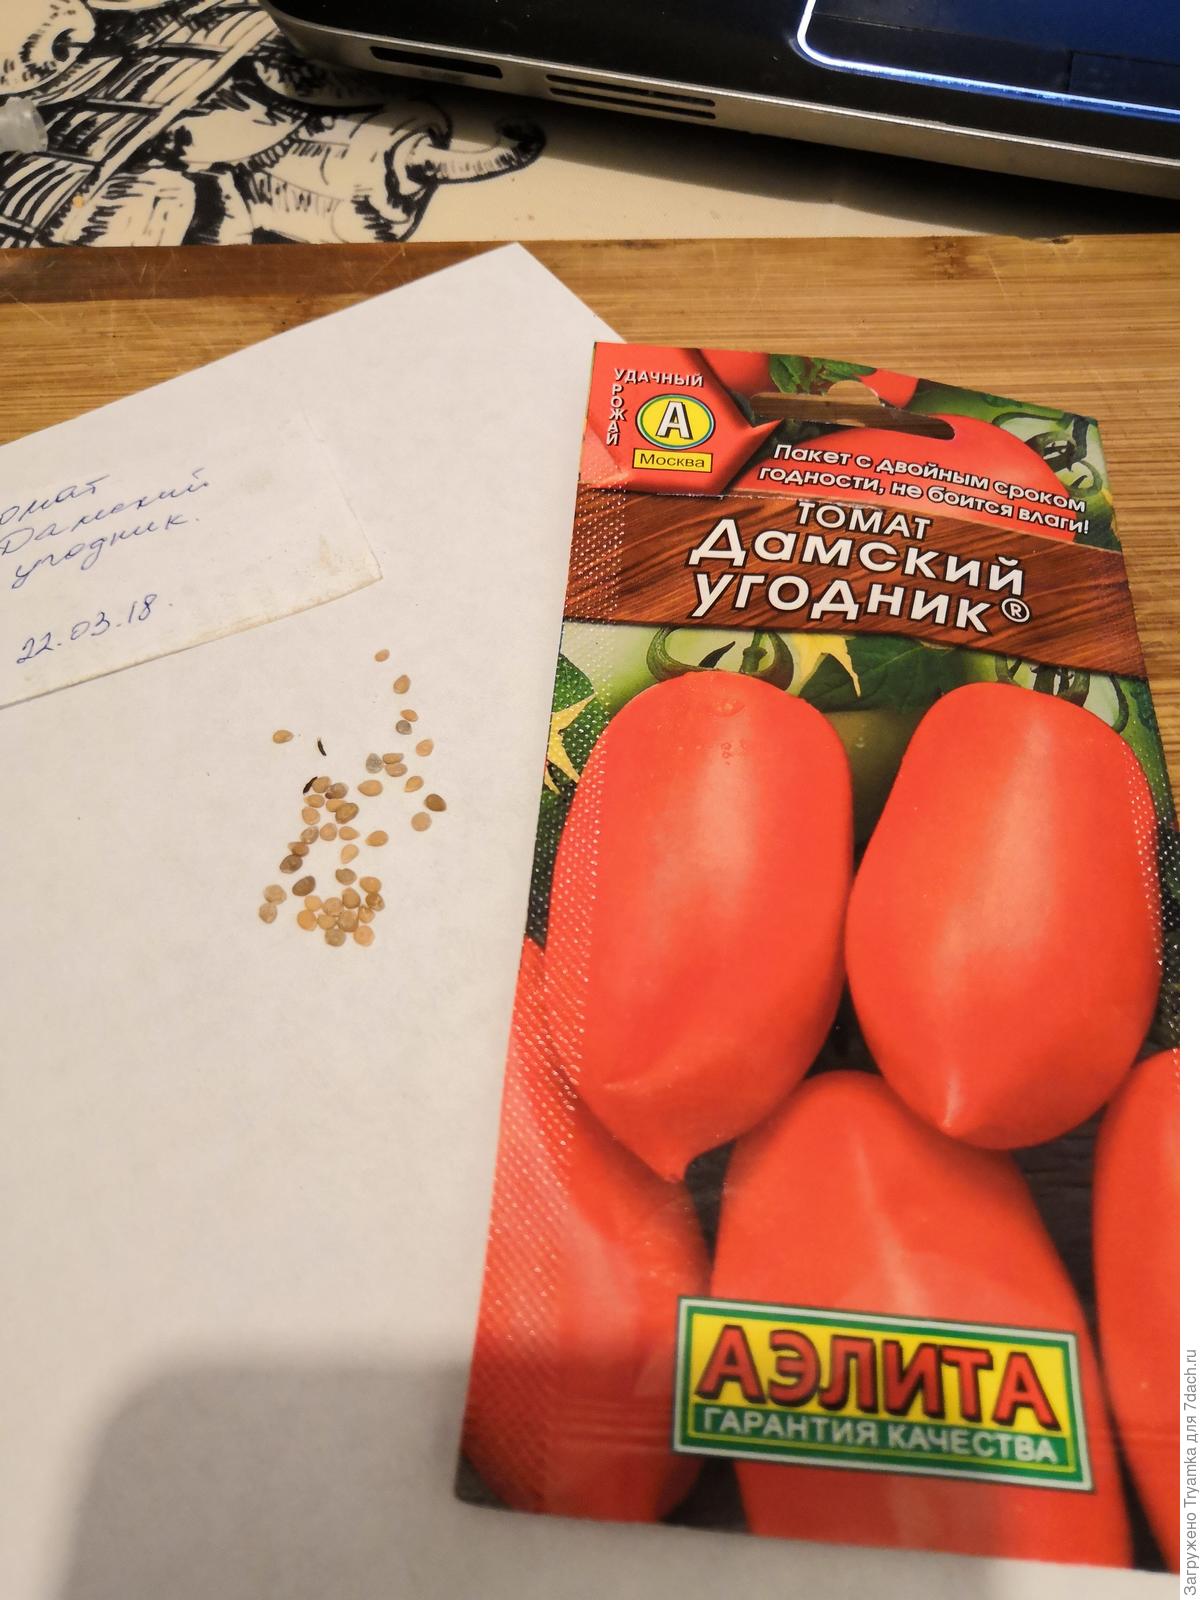 томаты оля фото